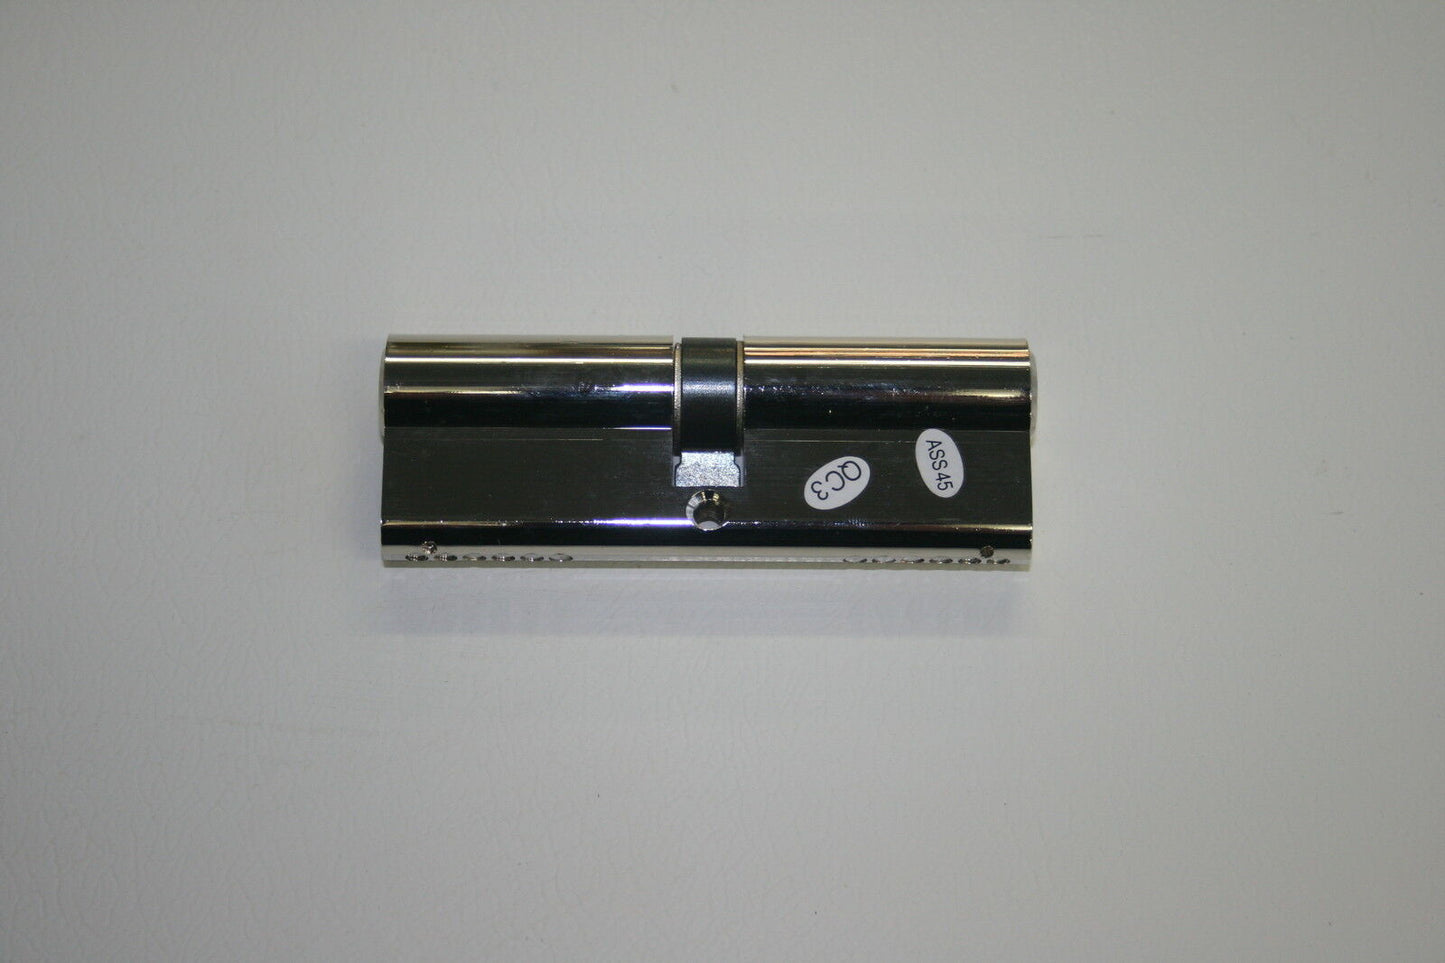 Pair 45/45 Suited / Keyed Alike Euro Cylinder Upvc Door Lock Barrell - Chrome